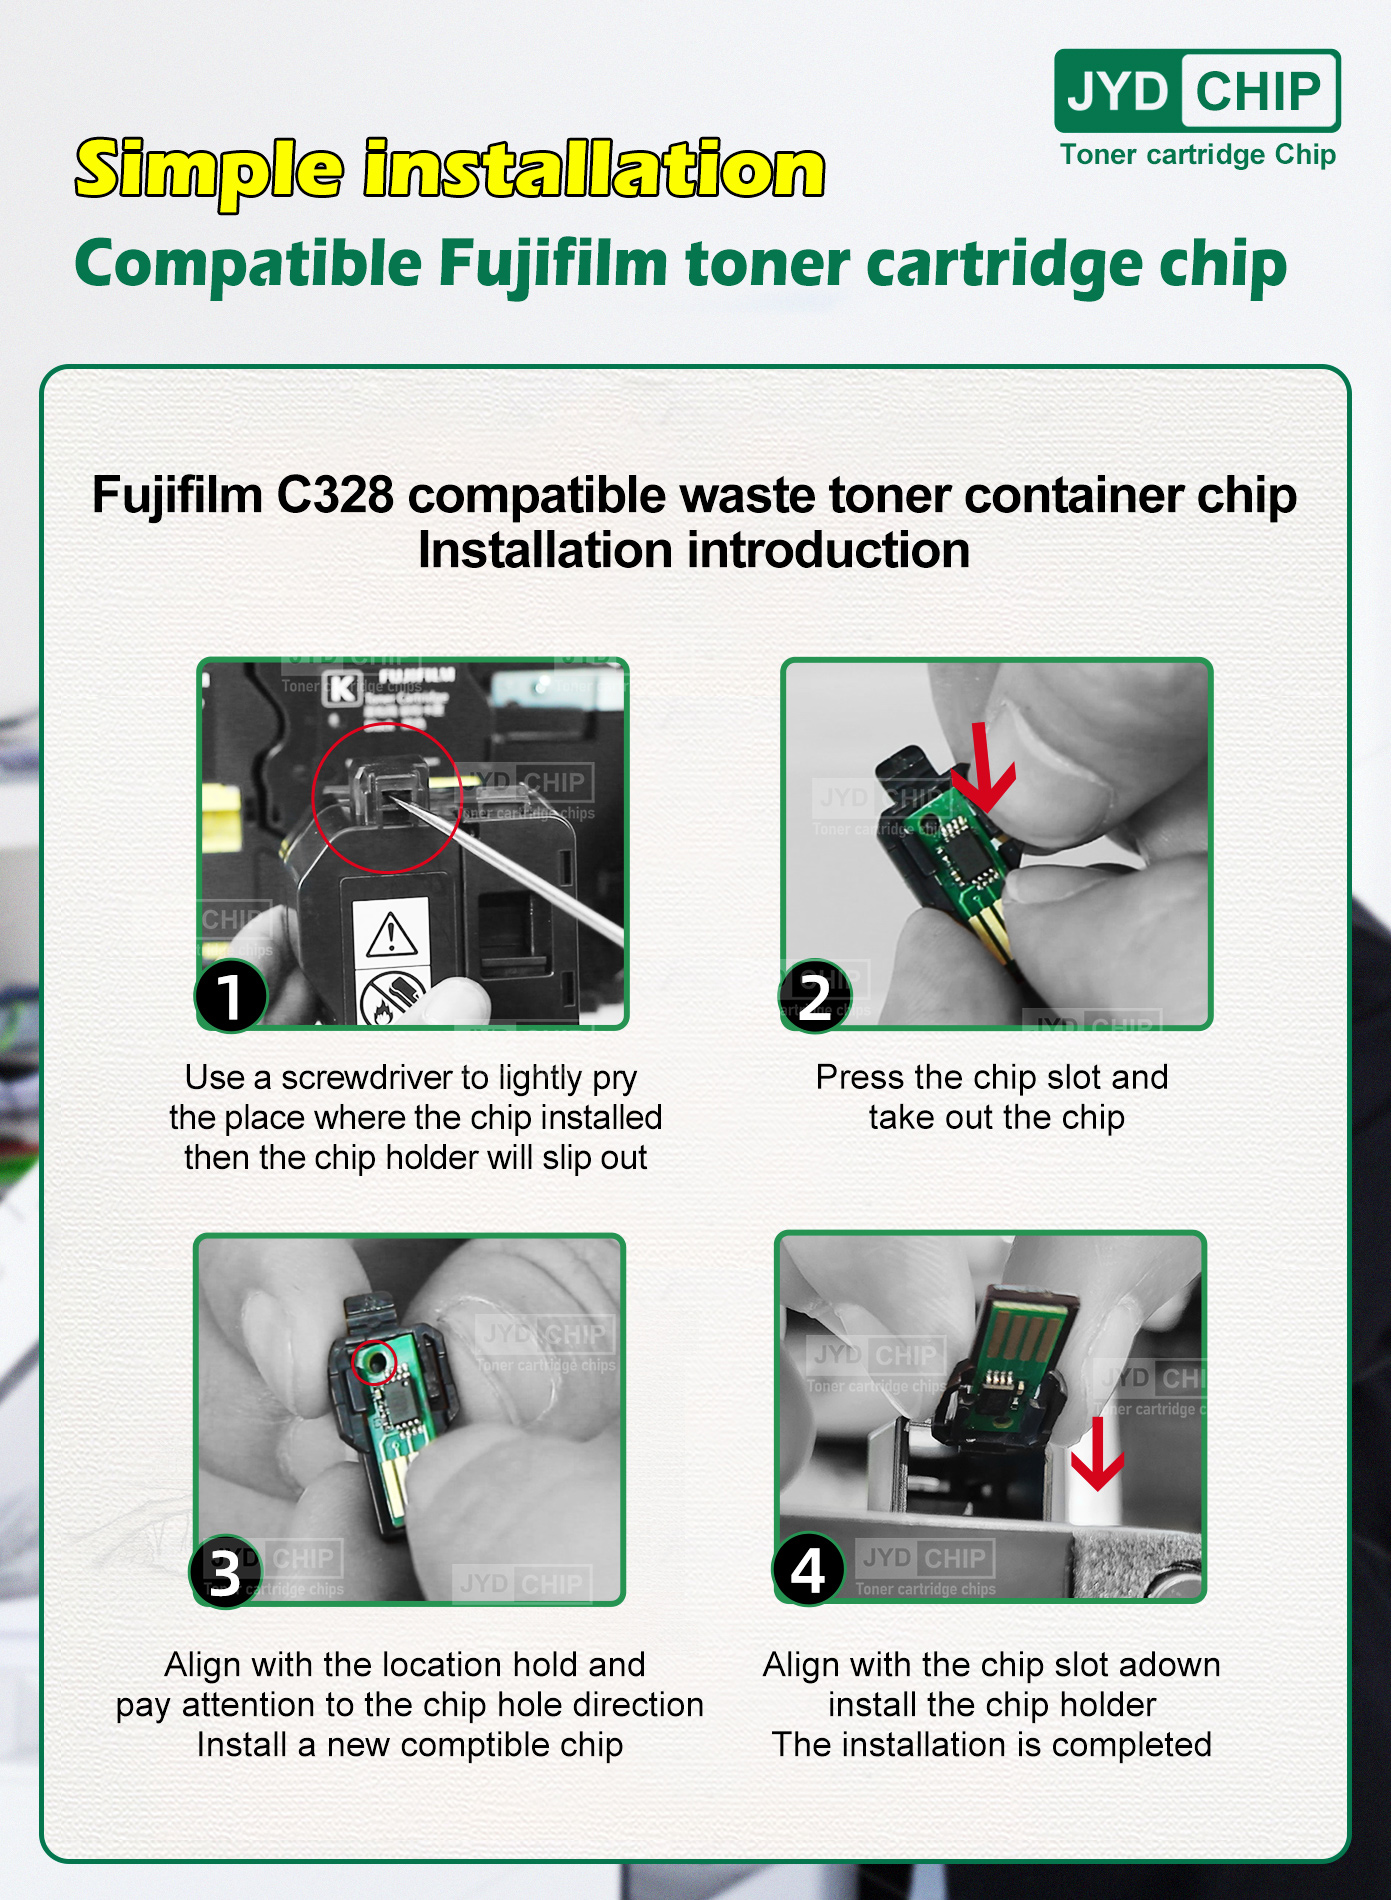 C328,Fujifilm,waste toner container chip,installation introduction